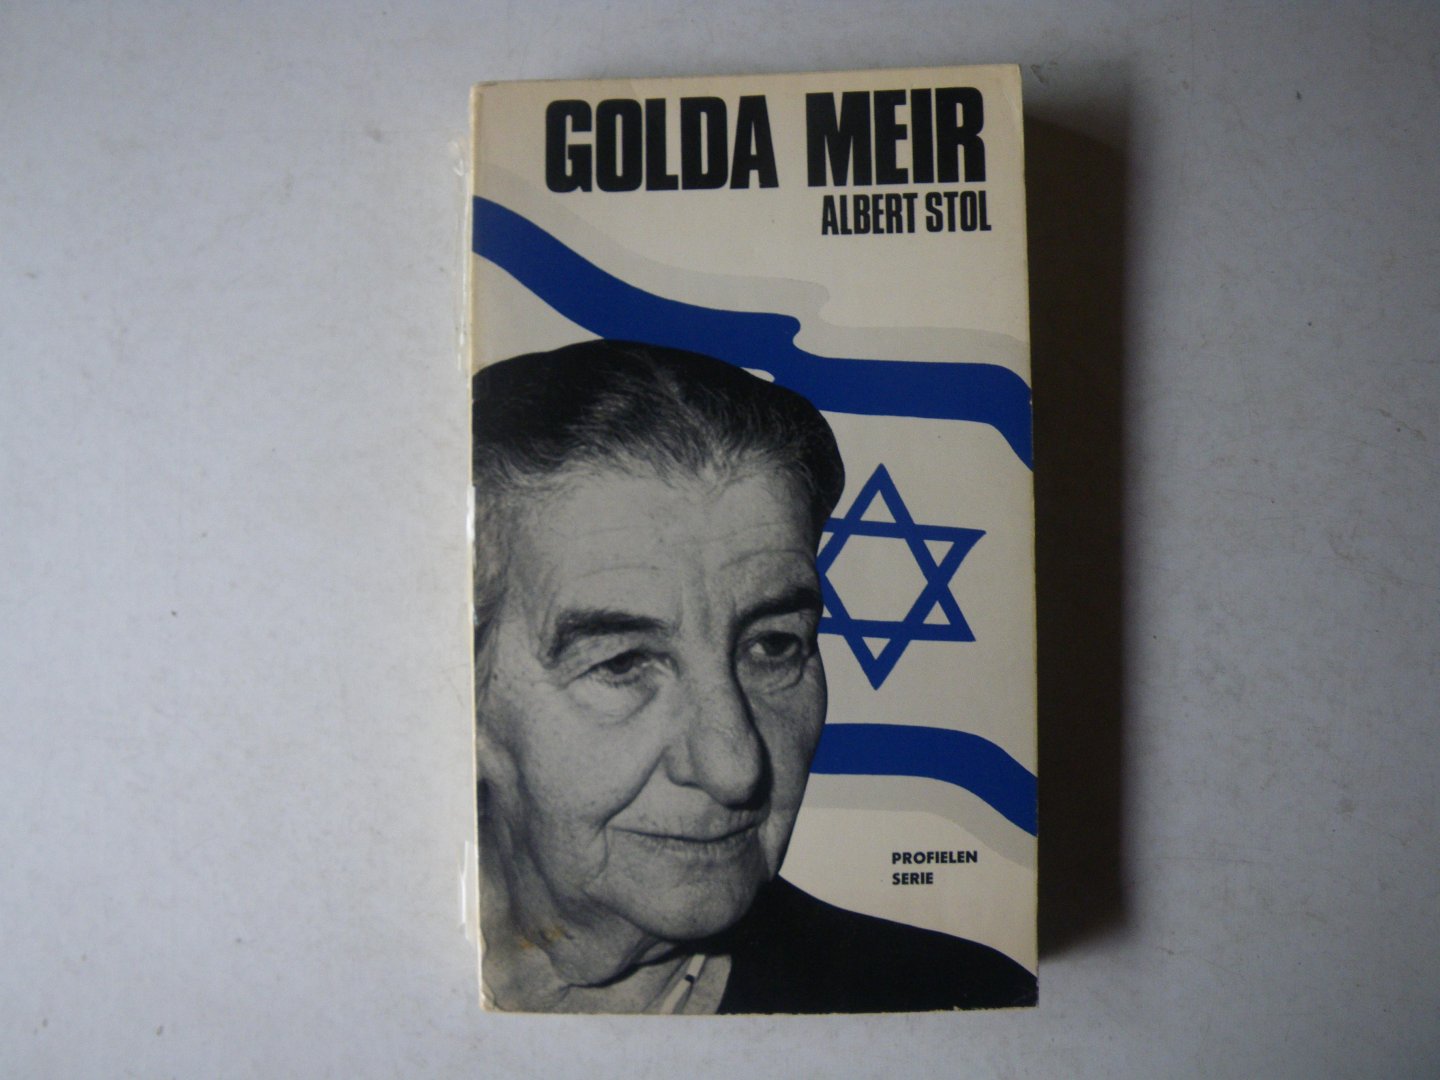 Stol, Albert - Golda Meir, profielen serie nr 8